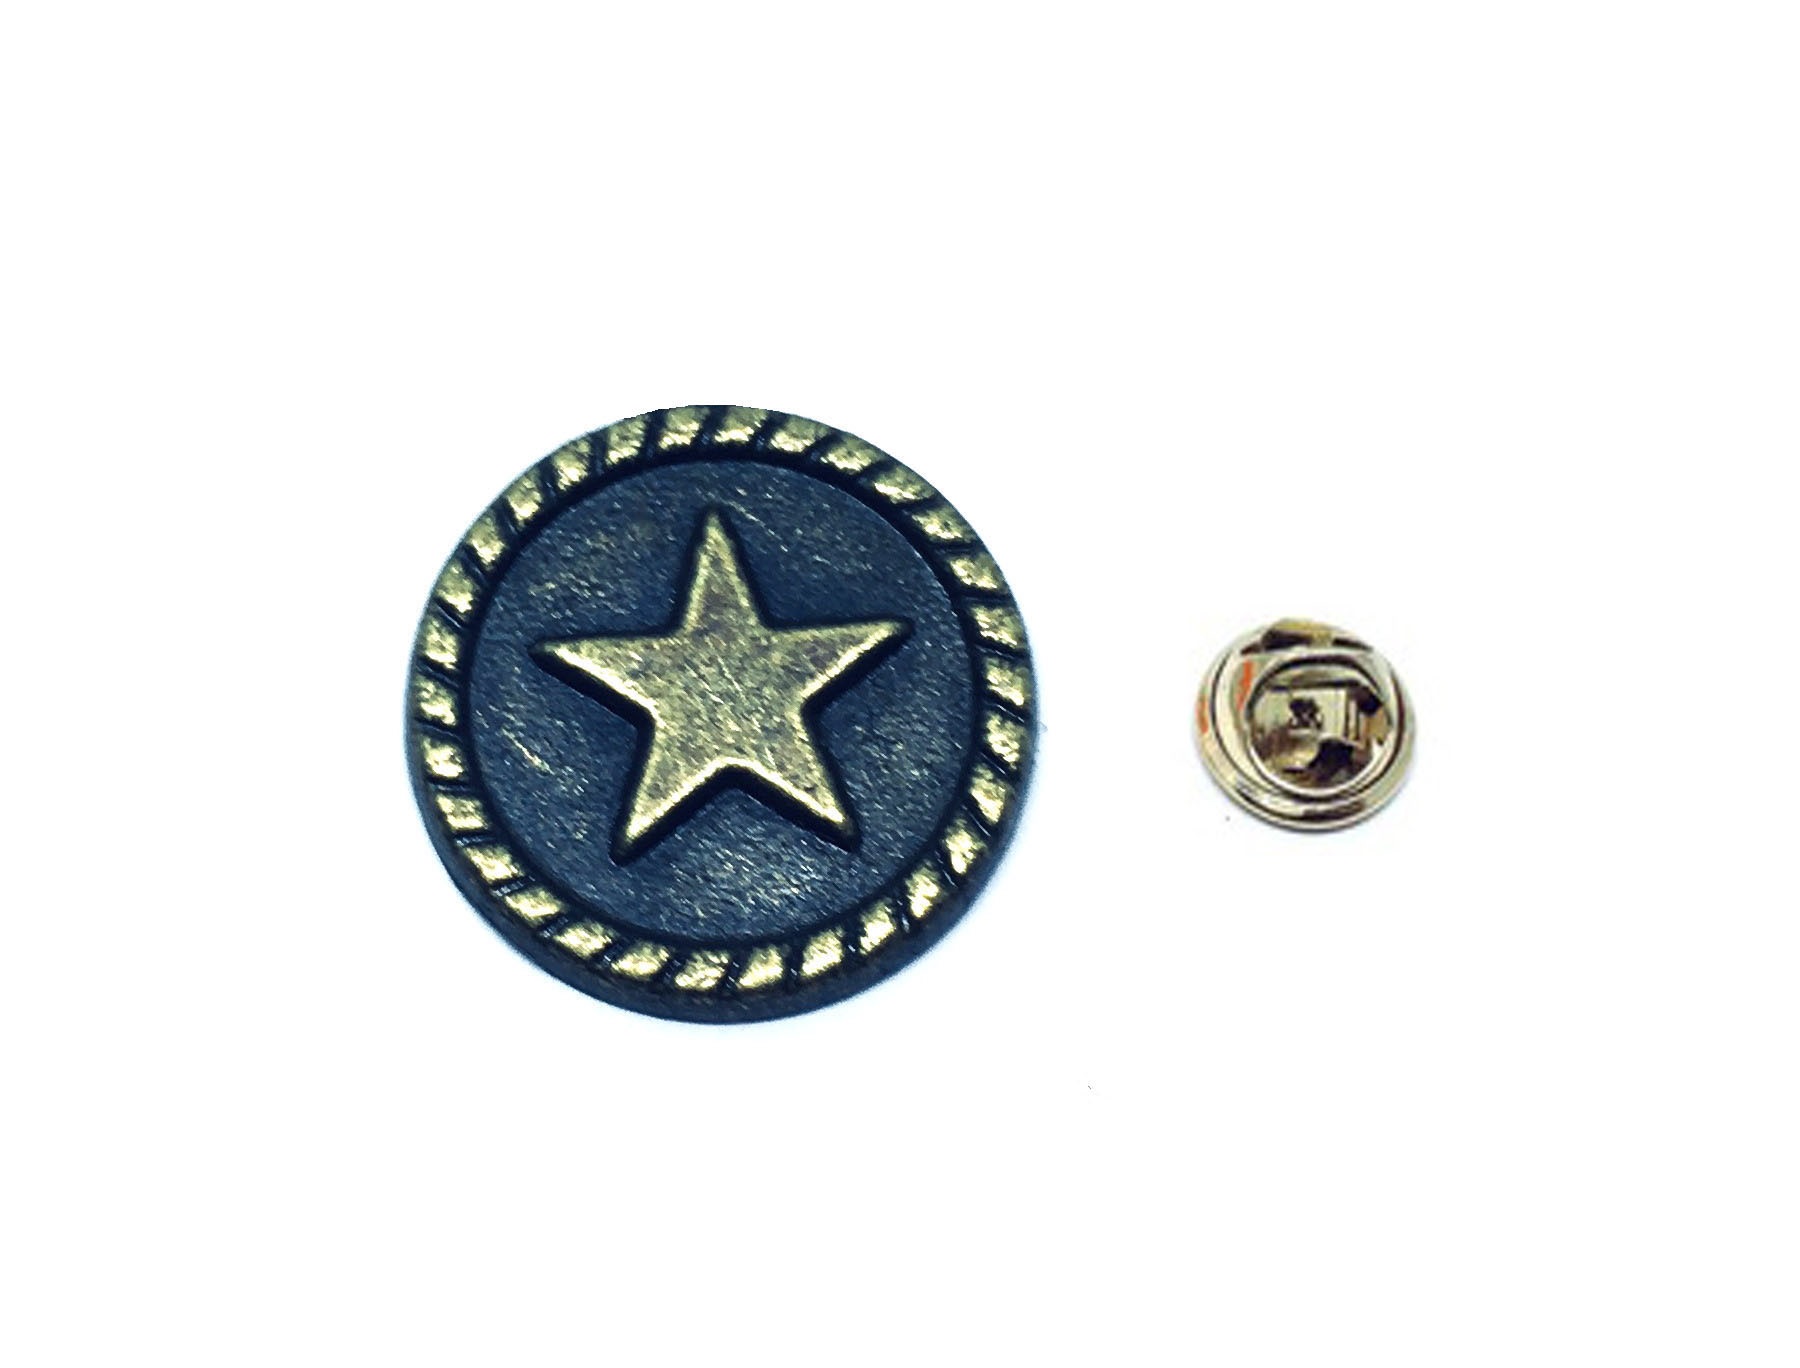 Bronze Star Lapel Pin